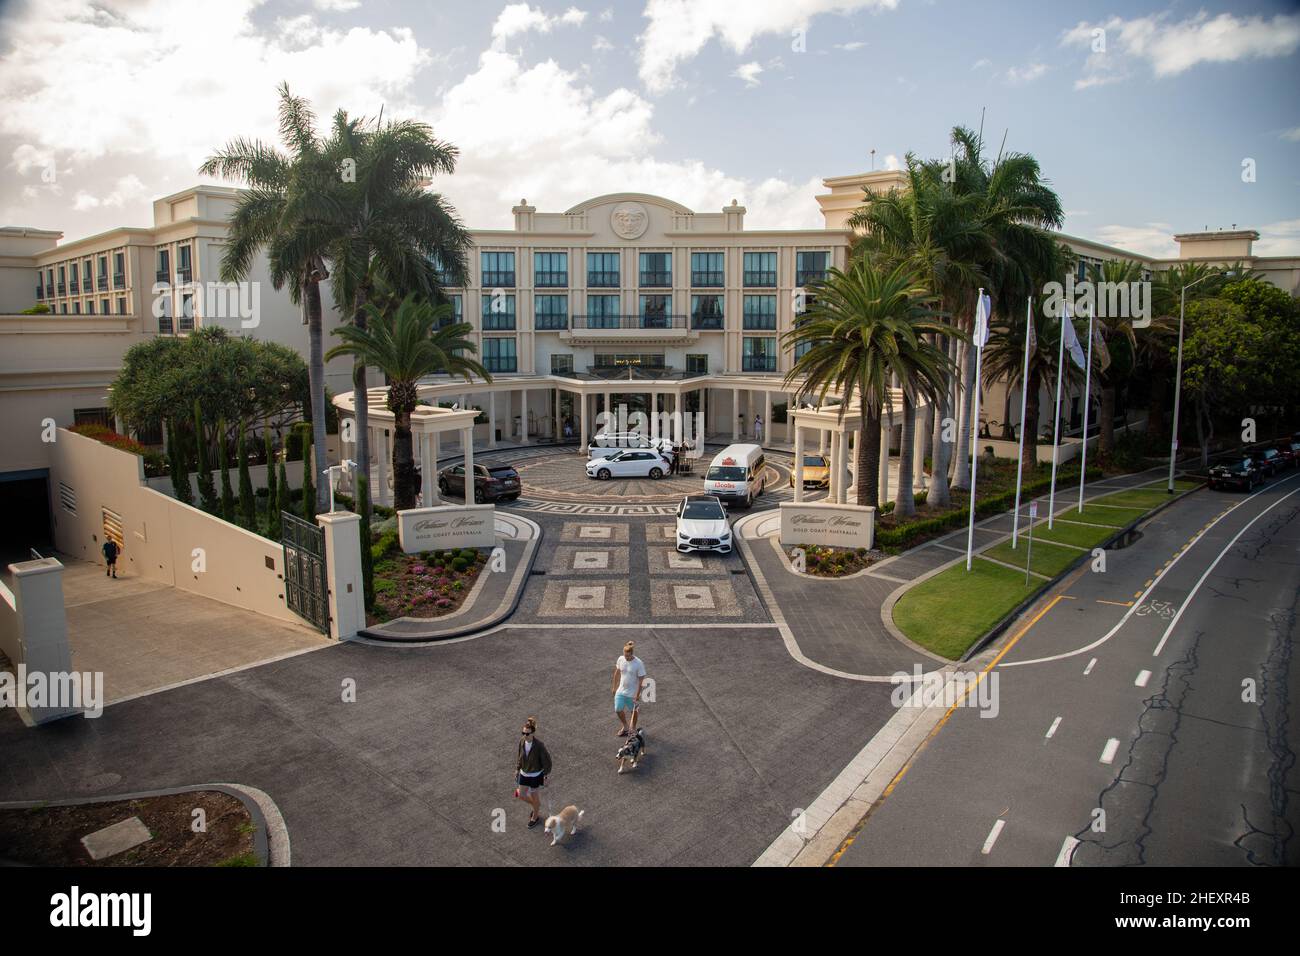 Palazzo Versace Luxury Hotel Gold Coast Foto Stock